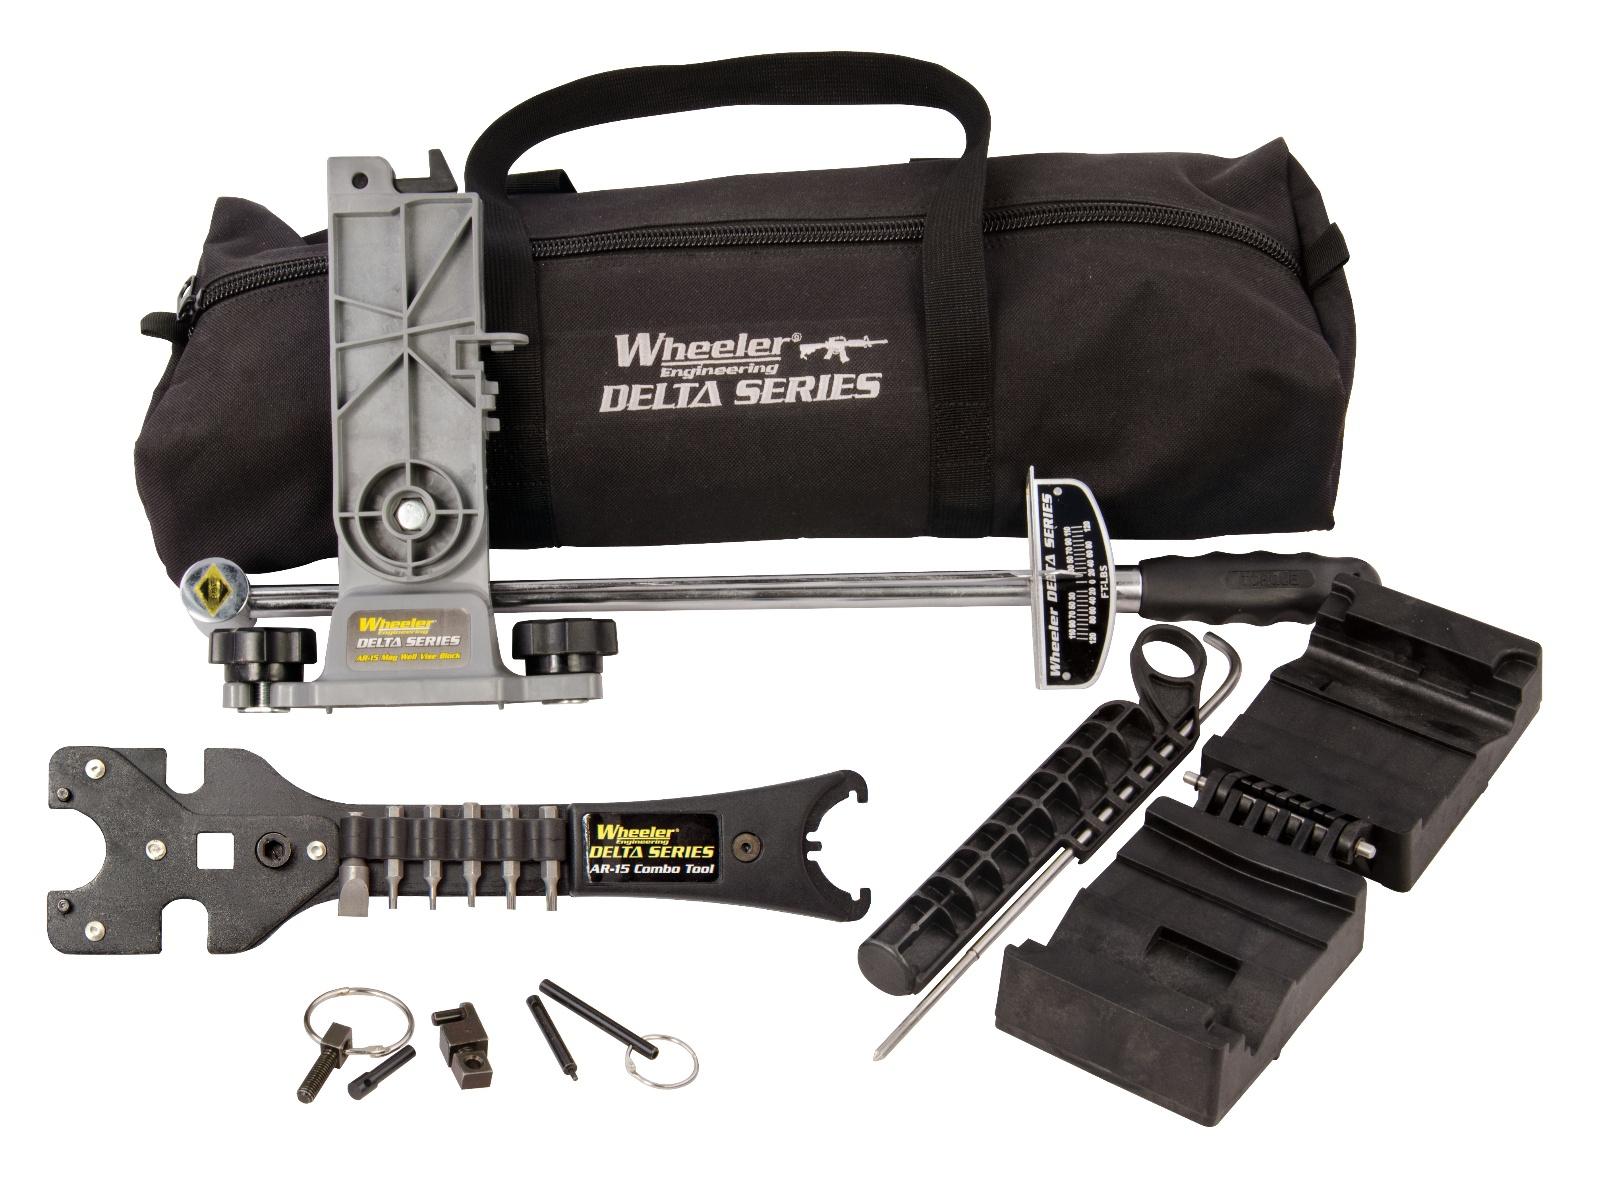 Wheeler AR 15 Essentials Kit